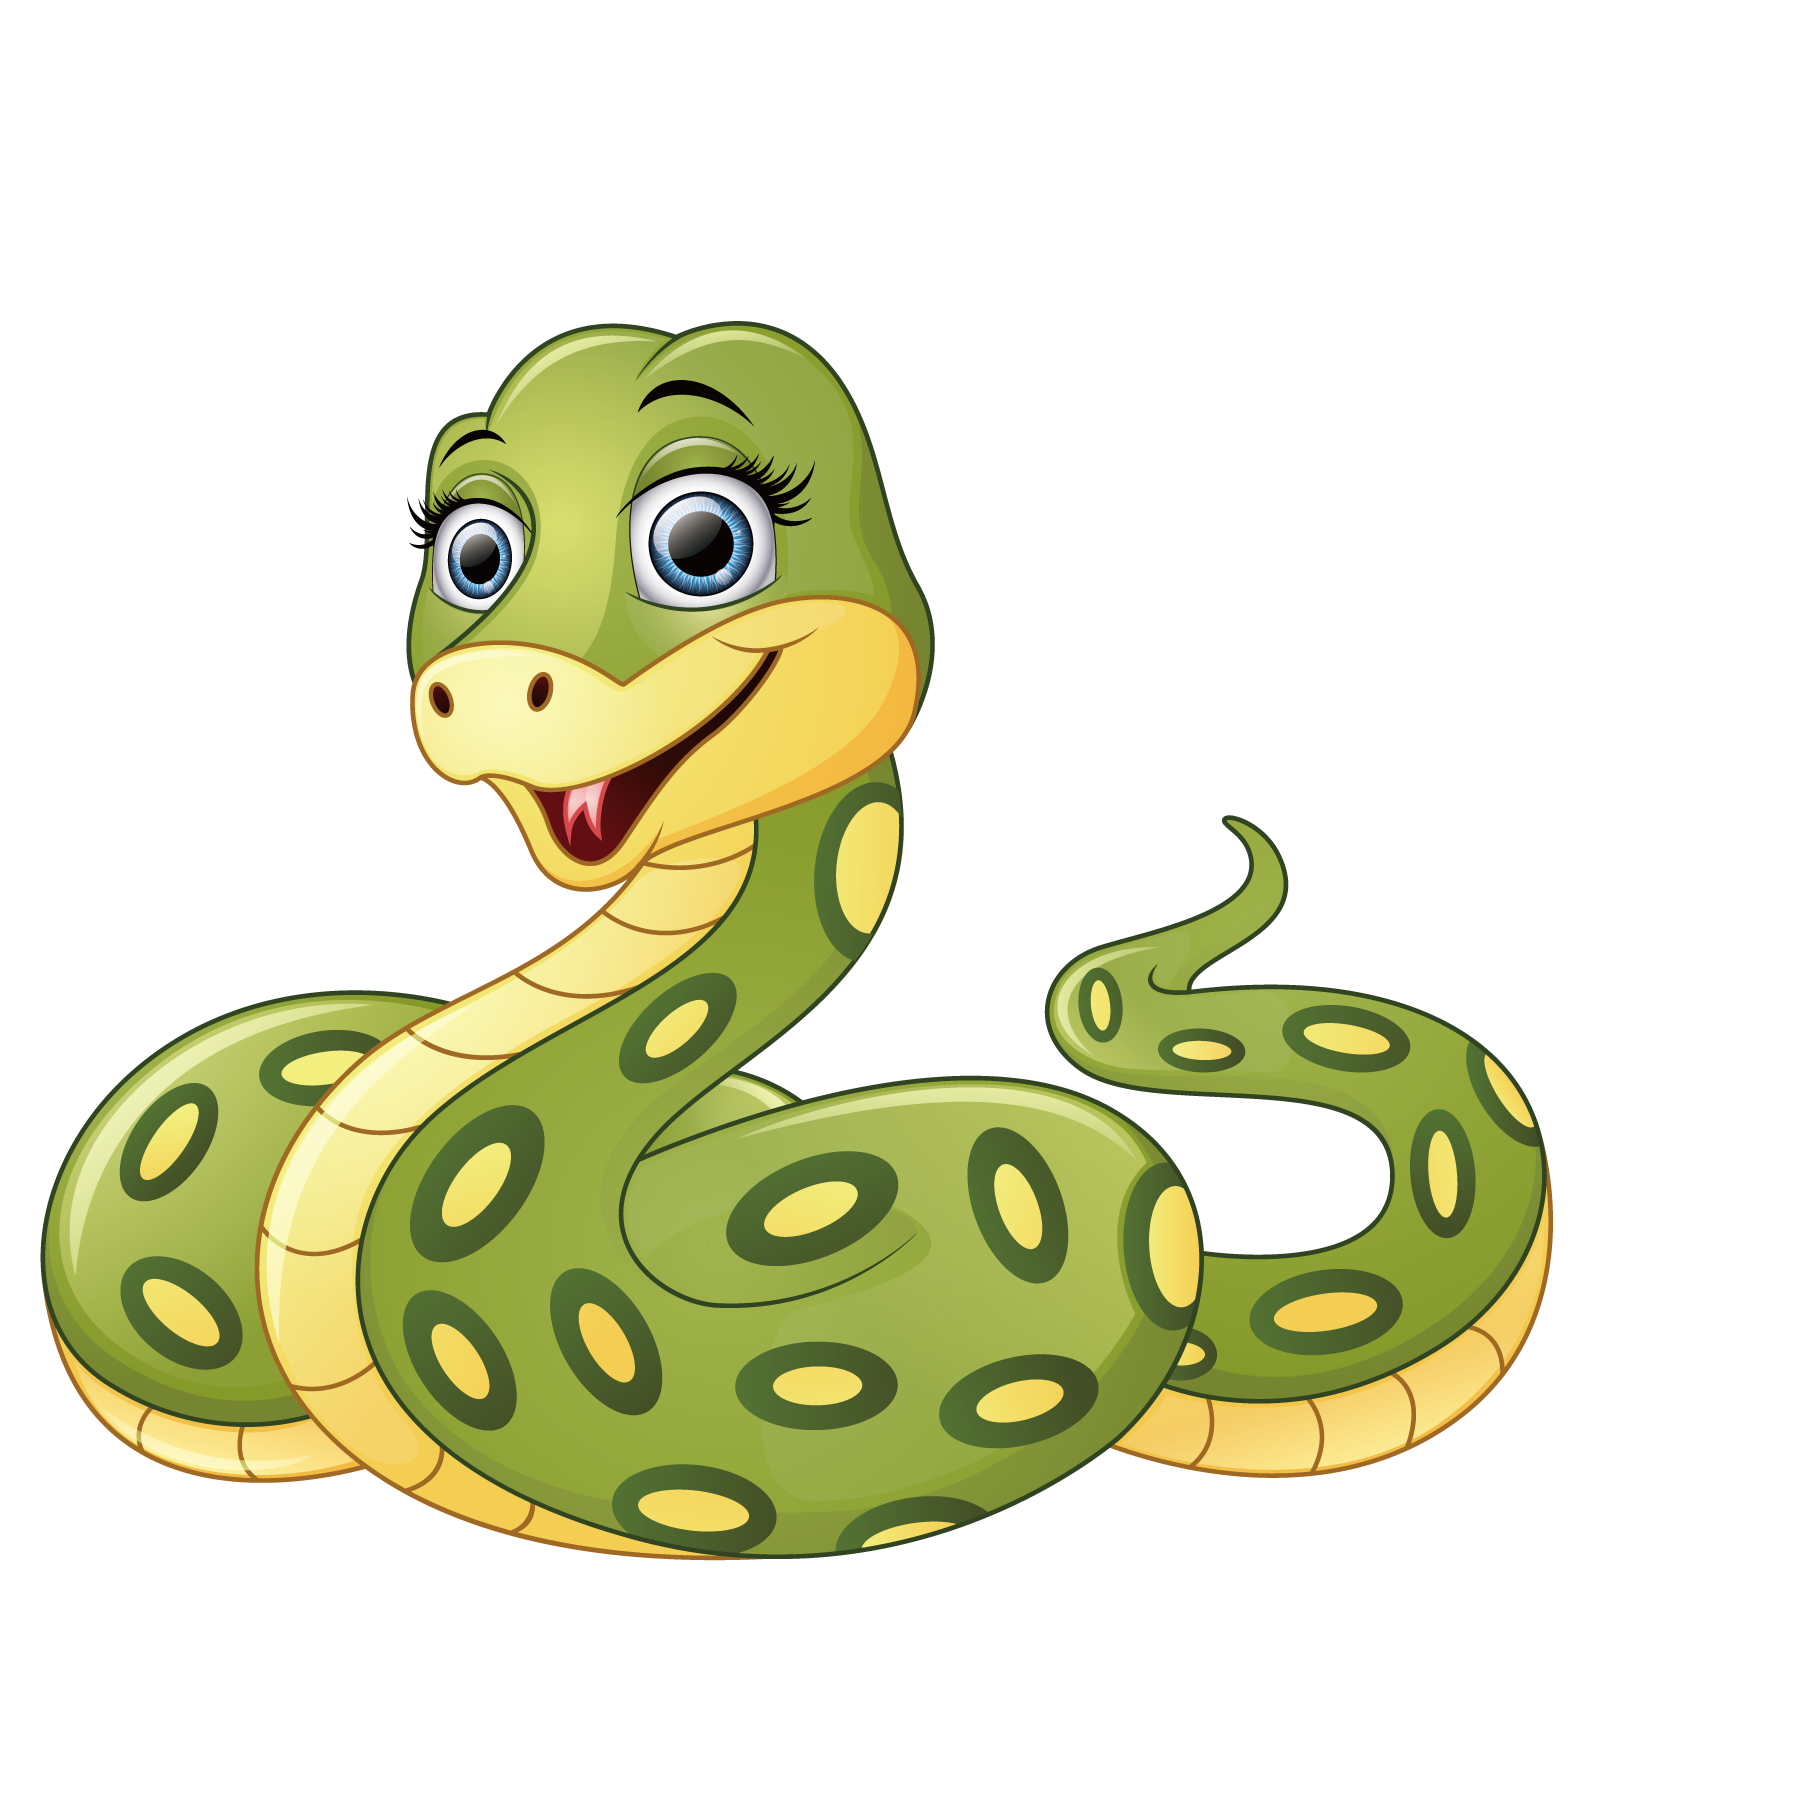 Змейка рисунок милый. Рисунок милой змейки. Милая змея рисунок. Green Snake cartoon.